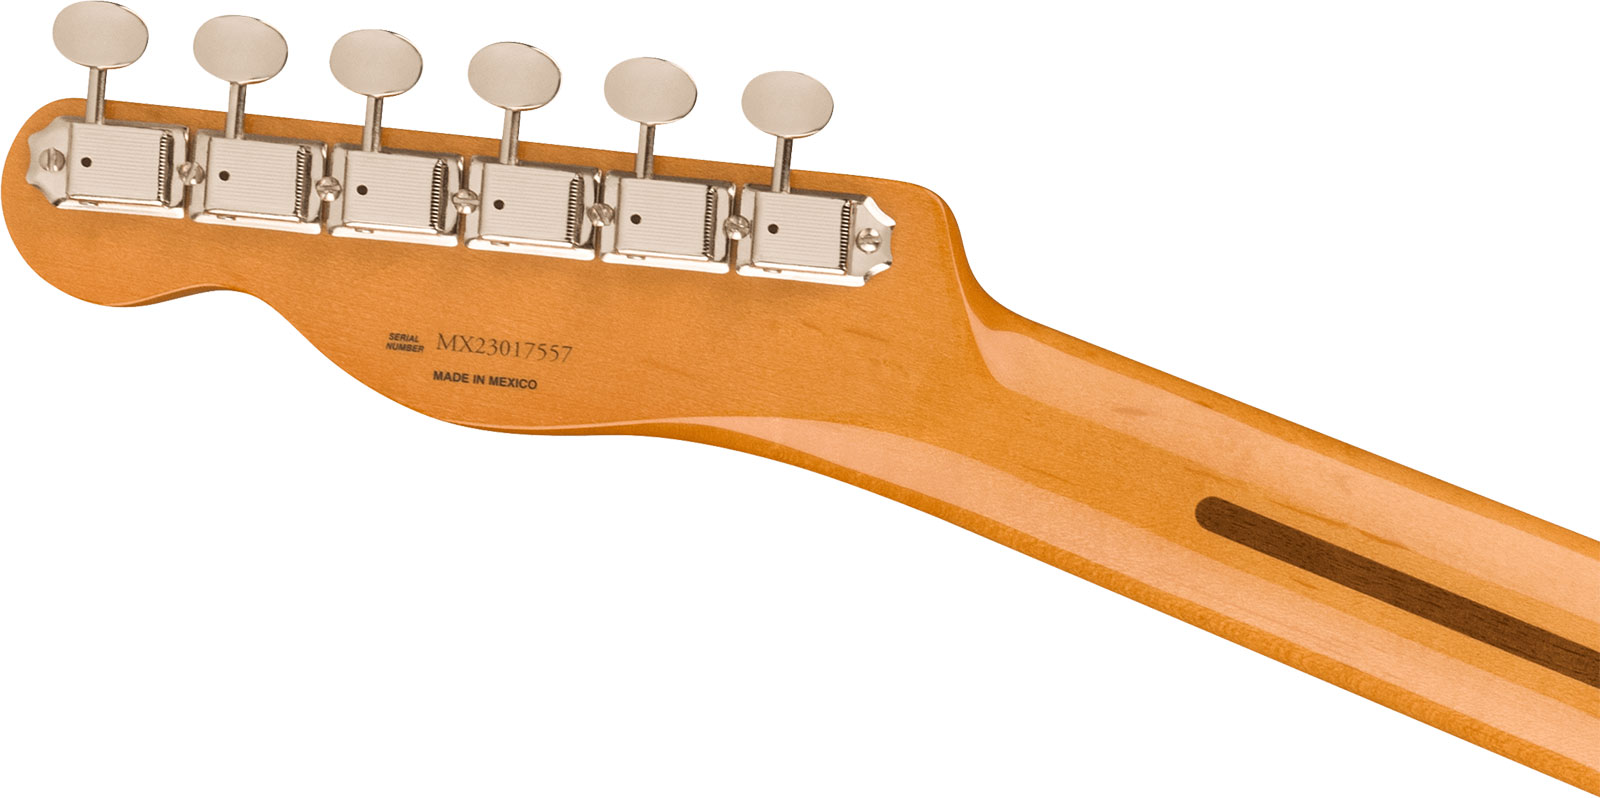 Fender Tele Nocaster 50s Vintera 2 Mex 2s Ht Mn - 2-color Sunburst - E-Gitarre in Teleform - Variation 3